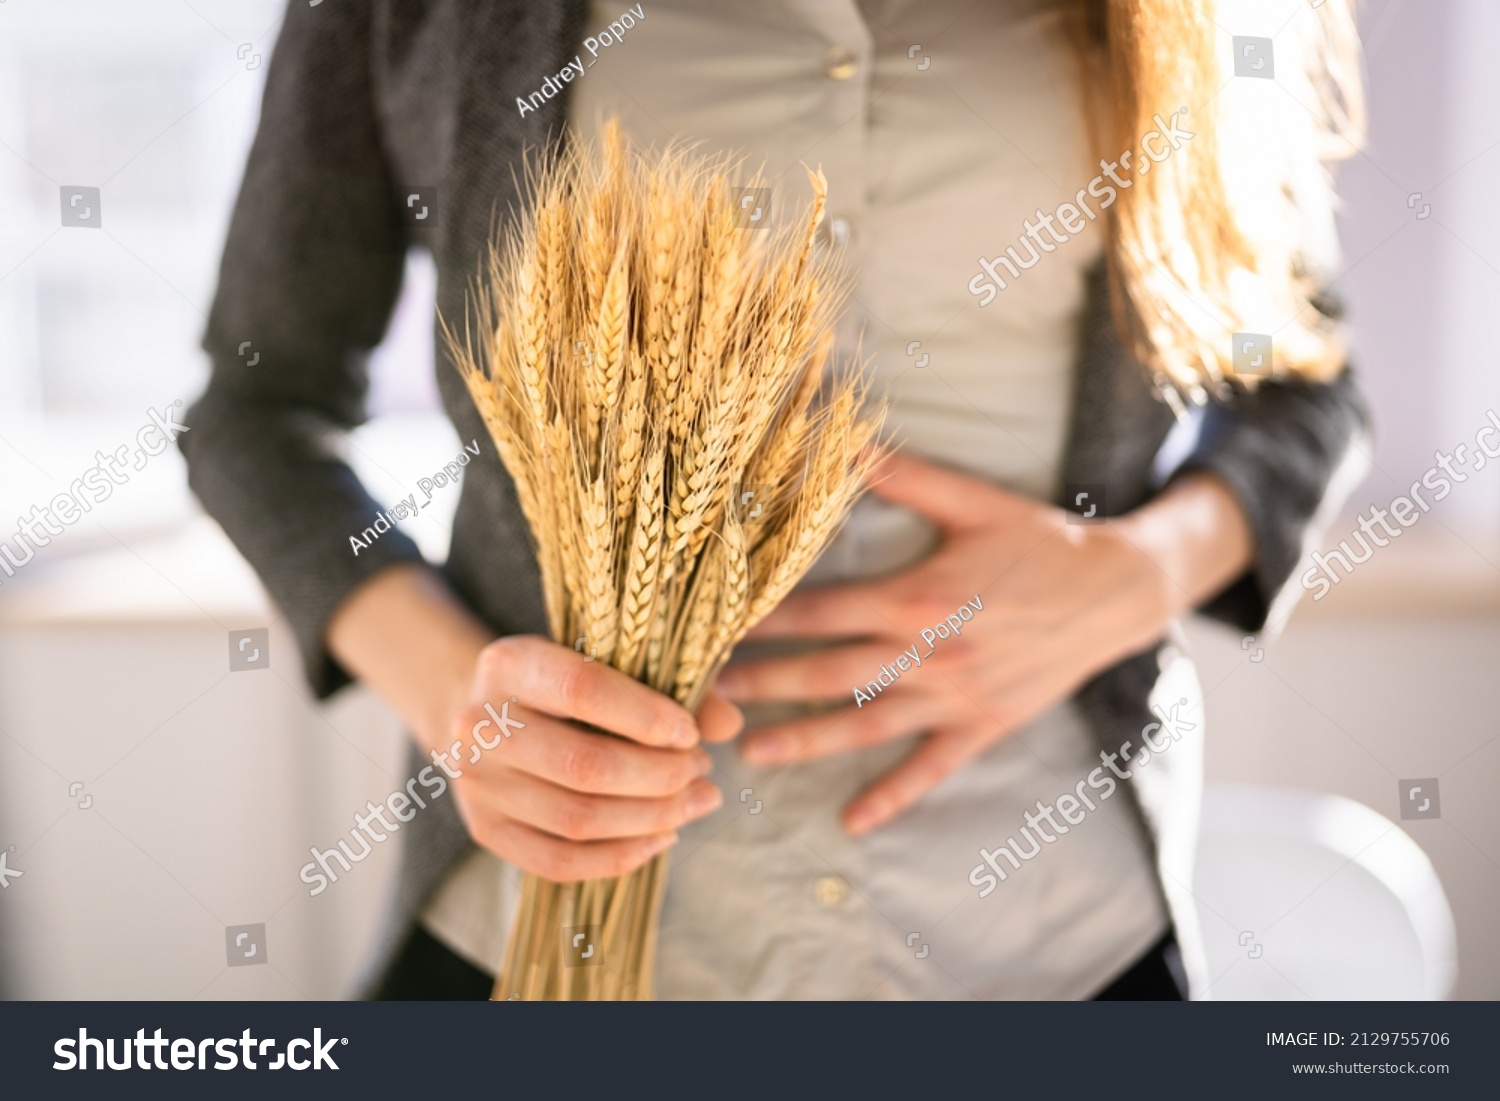 Celiac Disease And Gluten Intolerance. Women Holding Spikelet Of Wheat #2129755706